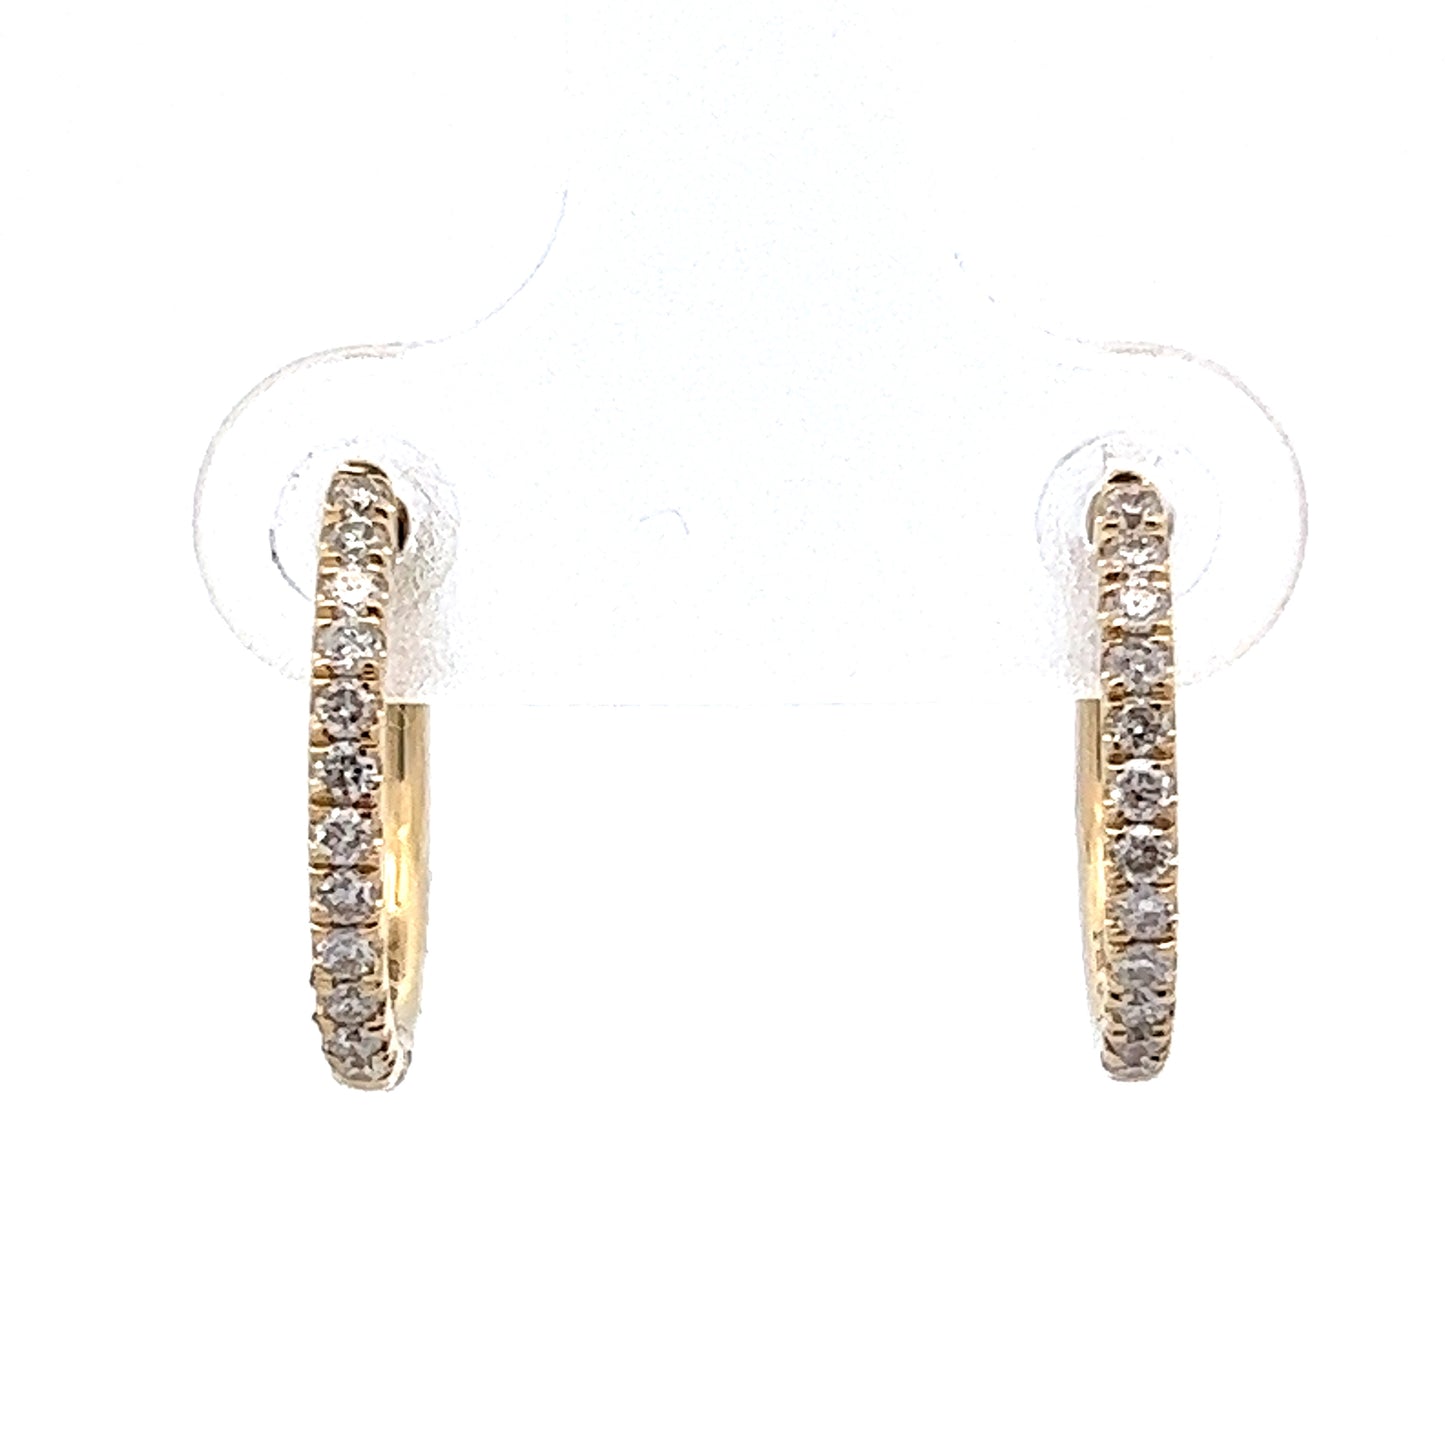 .24 Round Diamond Hoop Earrings in 14K Yellow Gold